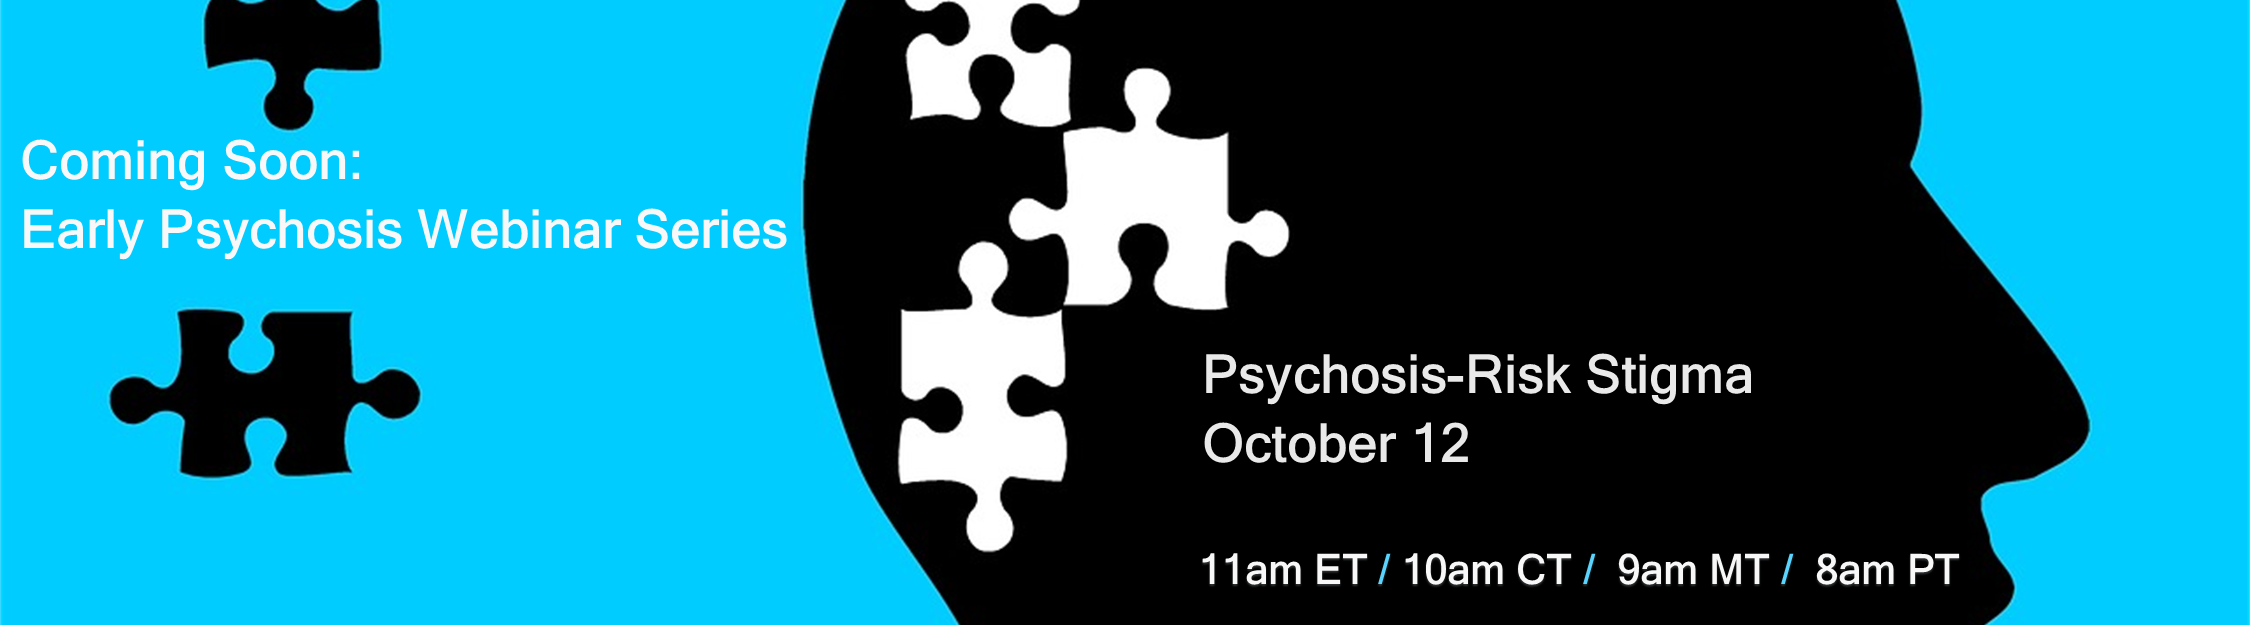 Coming Soon: Early Psychosis Webinar Series - Psychosis-Risk Stigma October 12 11am ET/10am CT/9am MT/8am PT